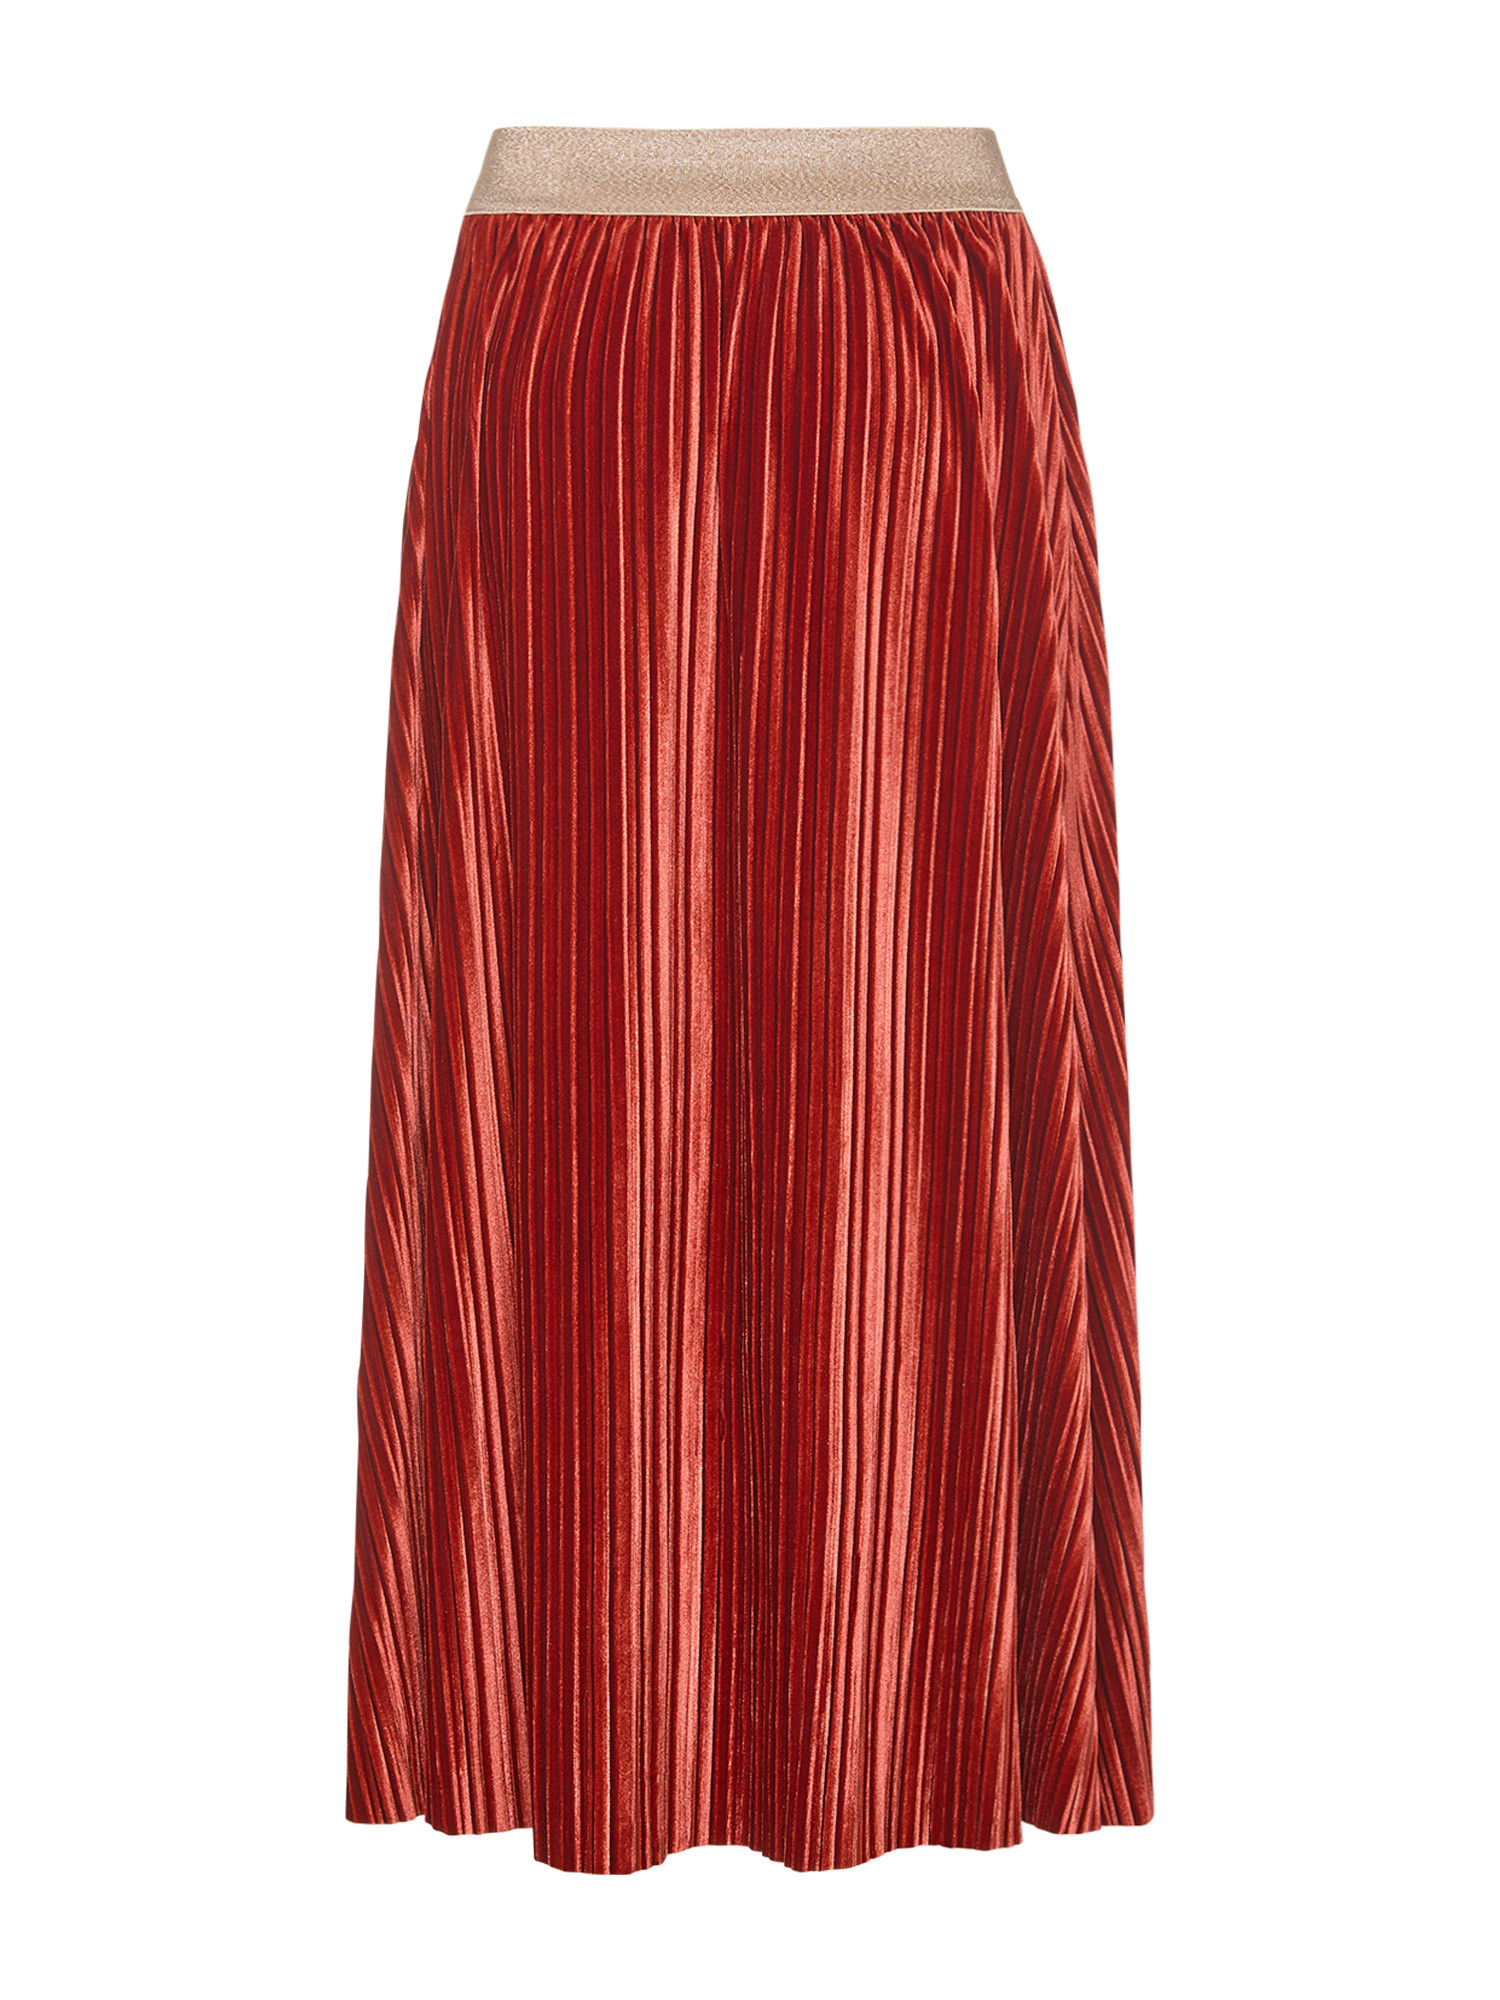 Koan - Flared skirt in pleated effect velvet, Copper Brown, large image number 1